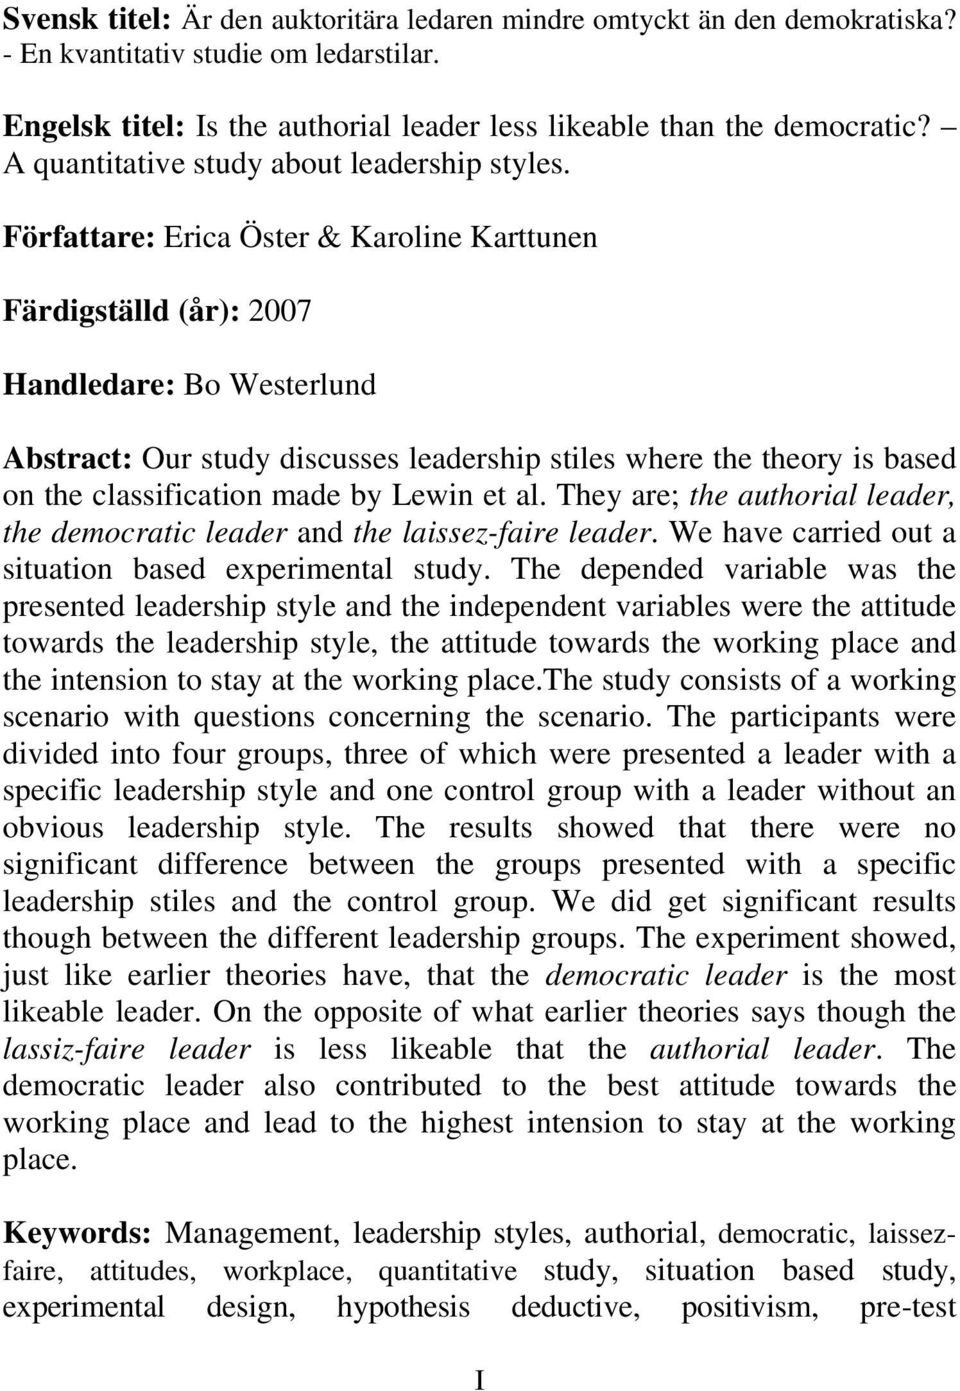 Författare: Erica Öster & Karoline Karttunen Färdigställd (år): 2007 Handledare: Bo Westerlund Abstract: Our study discusses leadership stiles where the theory is based on the classification made by